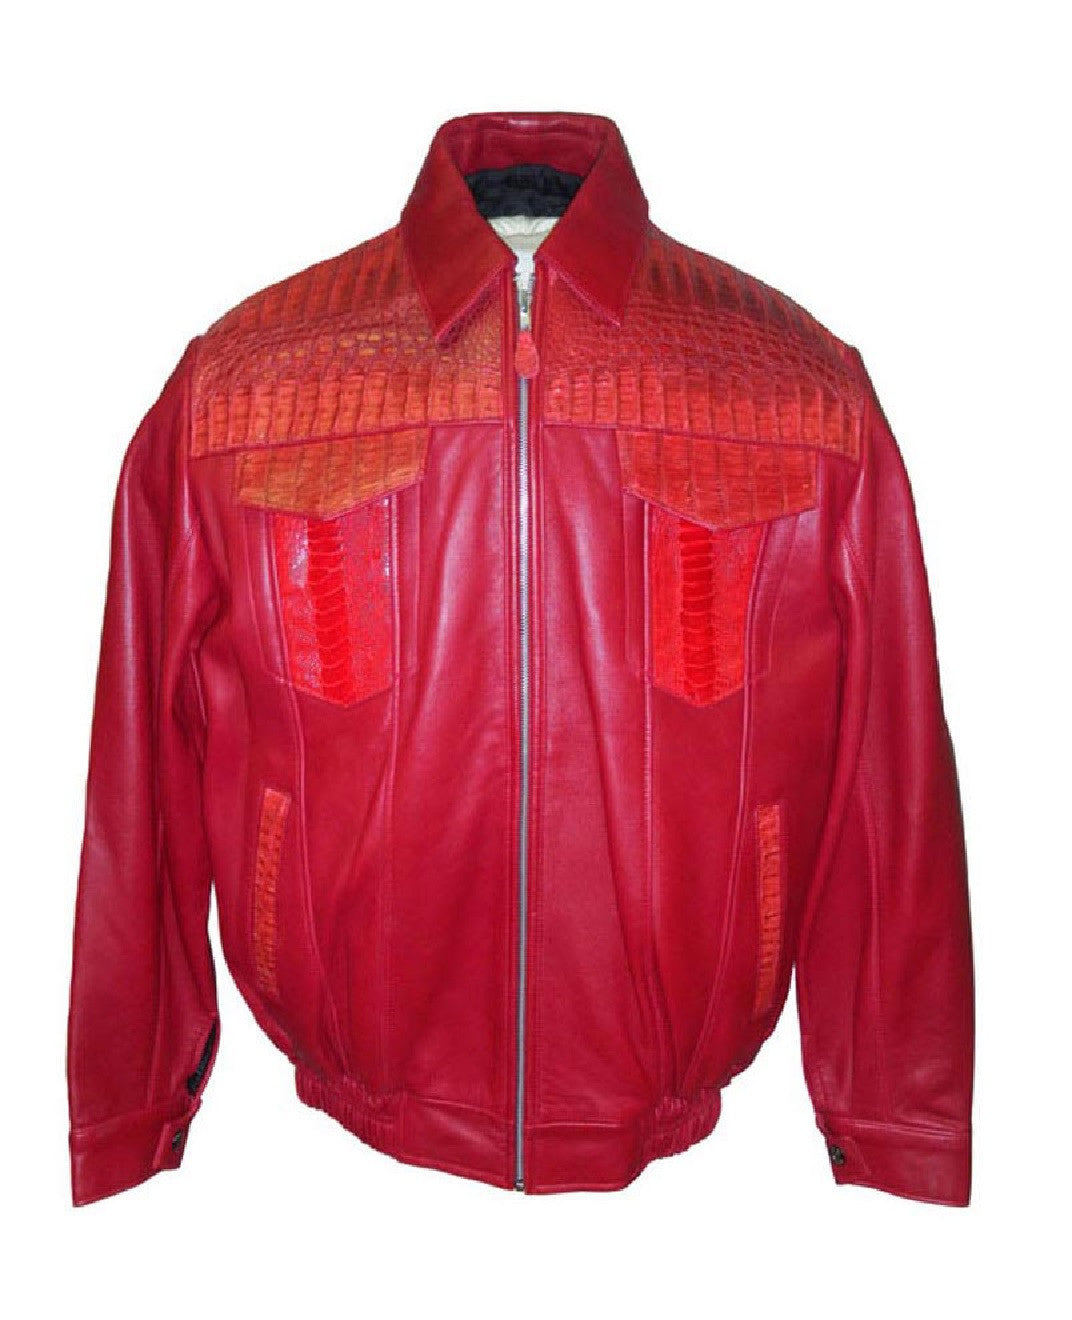 Korean fashion - mens red leather crocodile skin moto jacket.